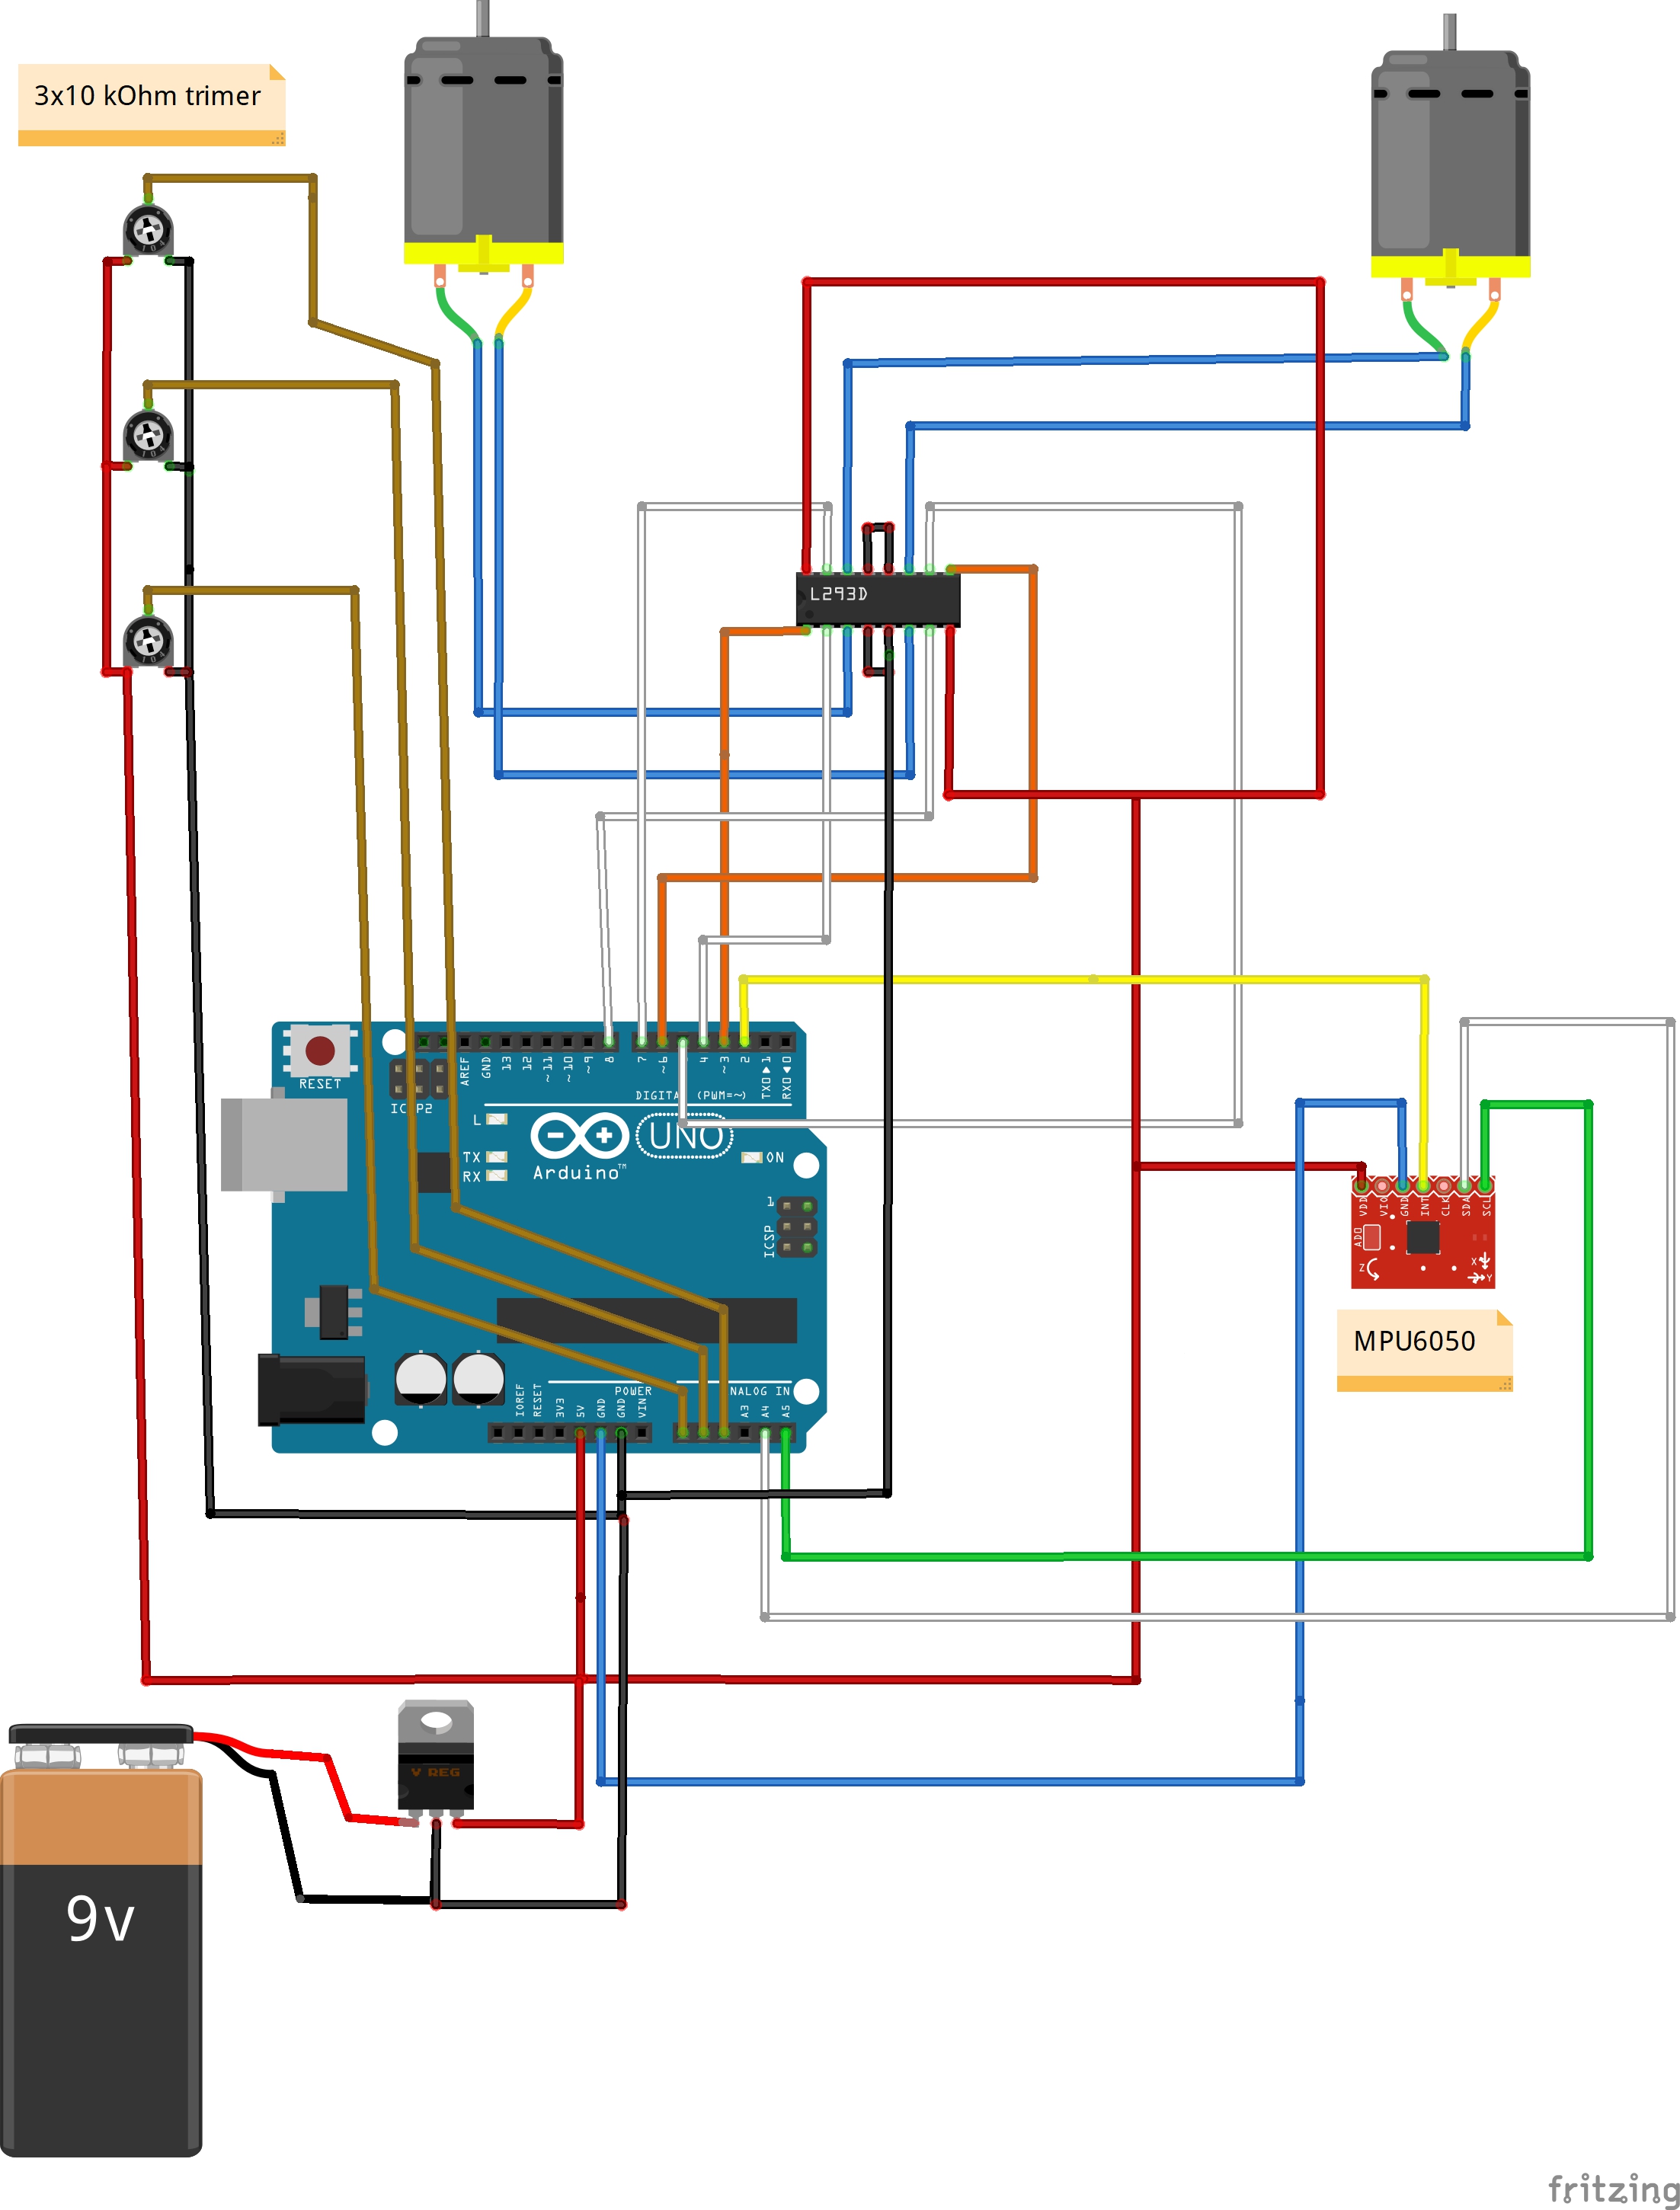 How to Build an Arduino Self-Balancing Robot, Arduino